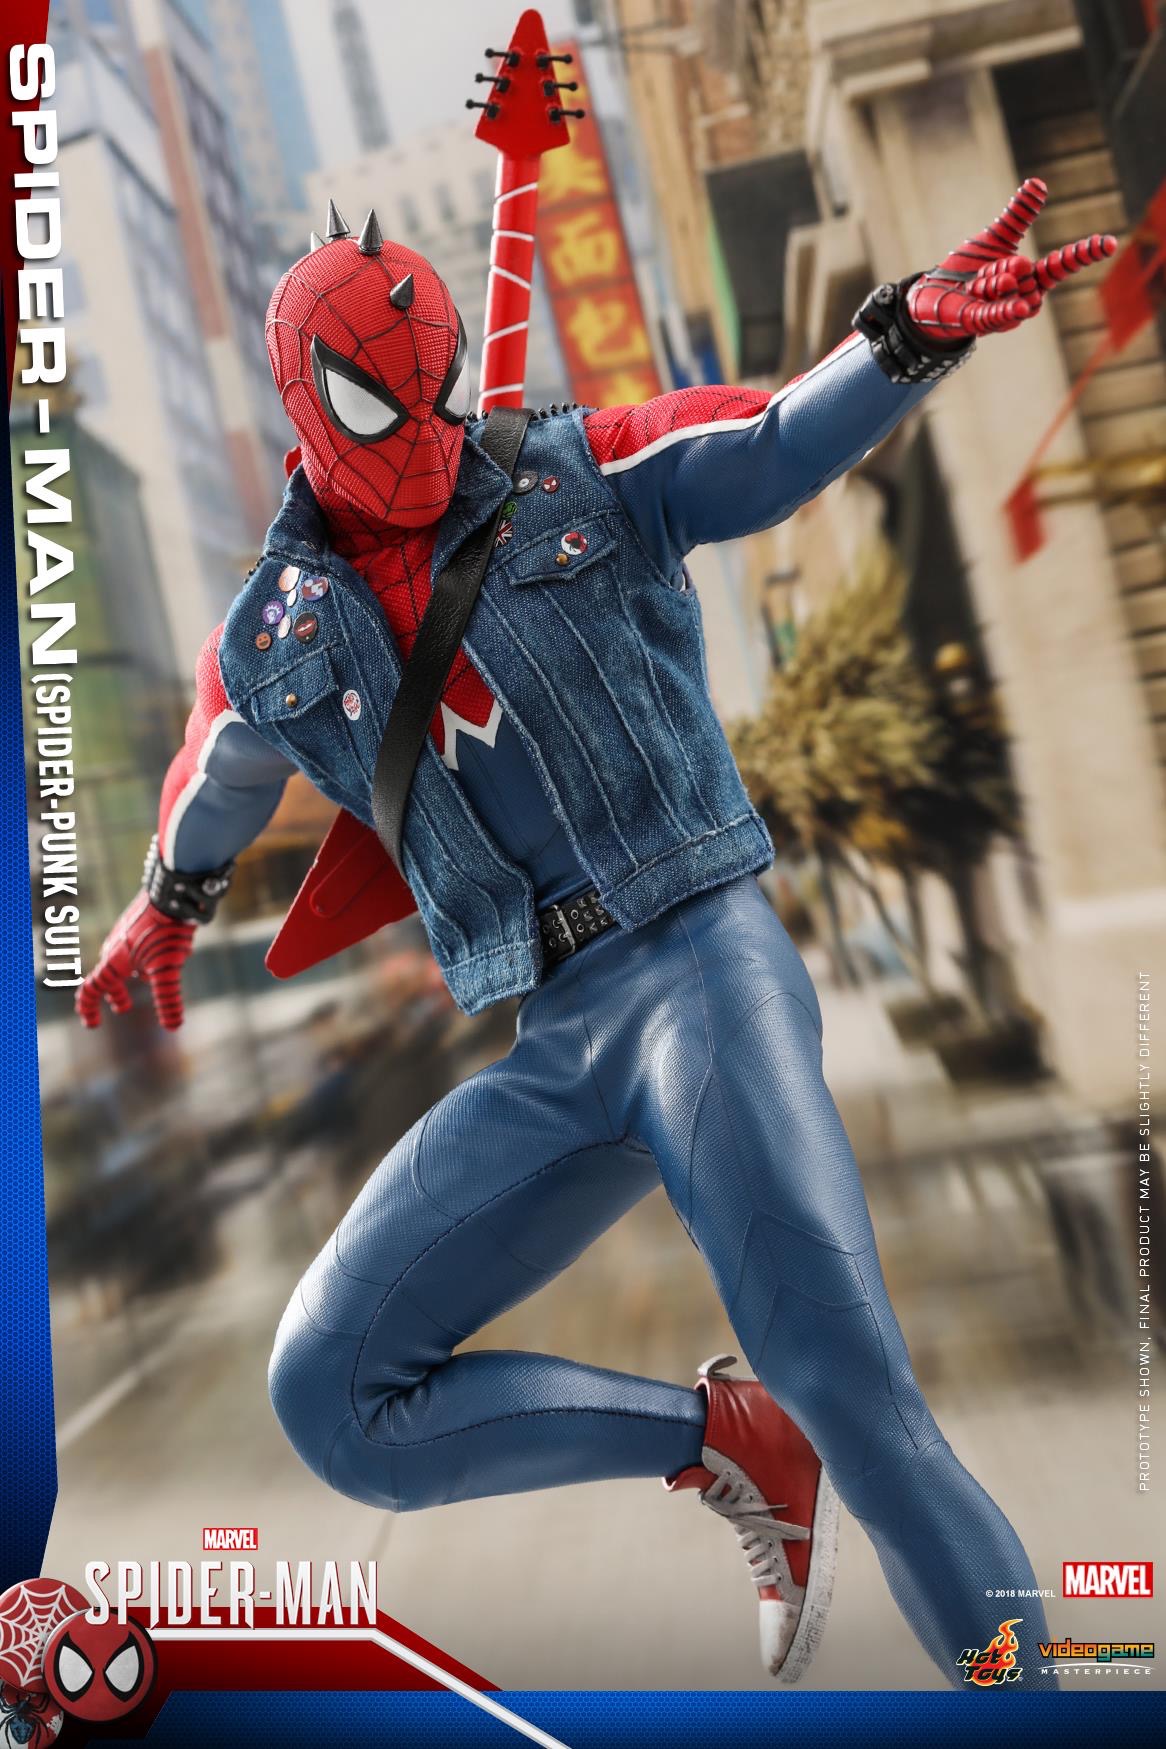 Marvel's Spider-Man – Spider-Punk Suit Collectible Figure ... - 1166 x 1749 jpeg 417kB